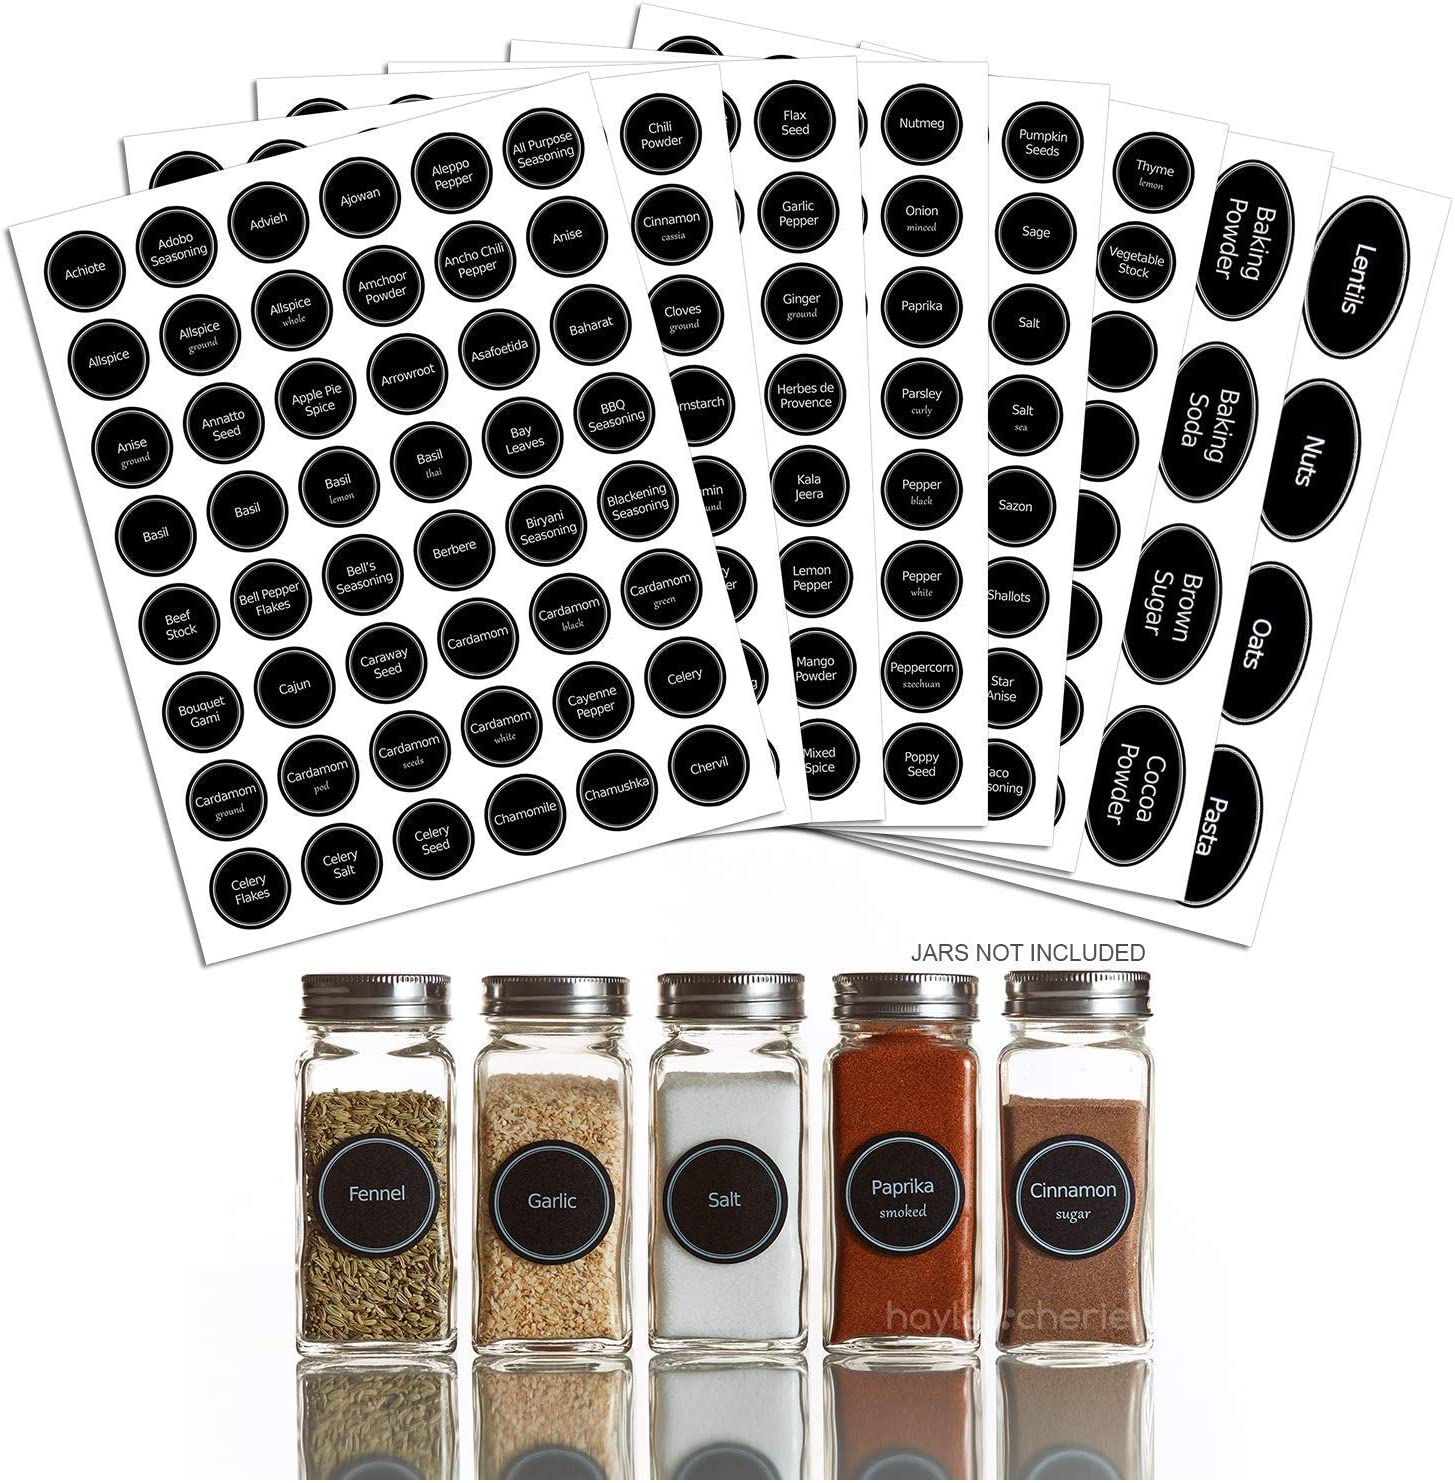 Spice Jar Labels - Blank or Custom